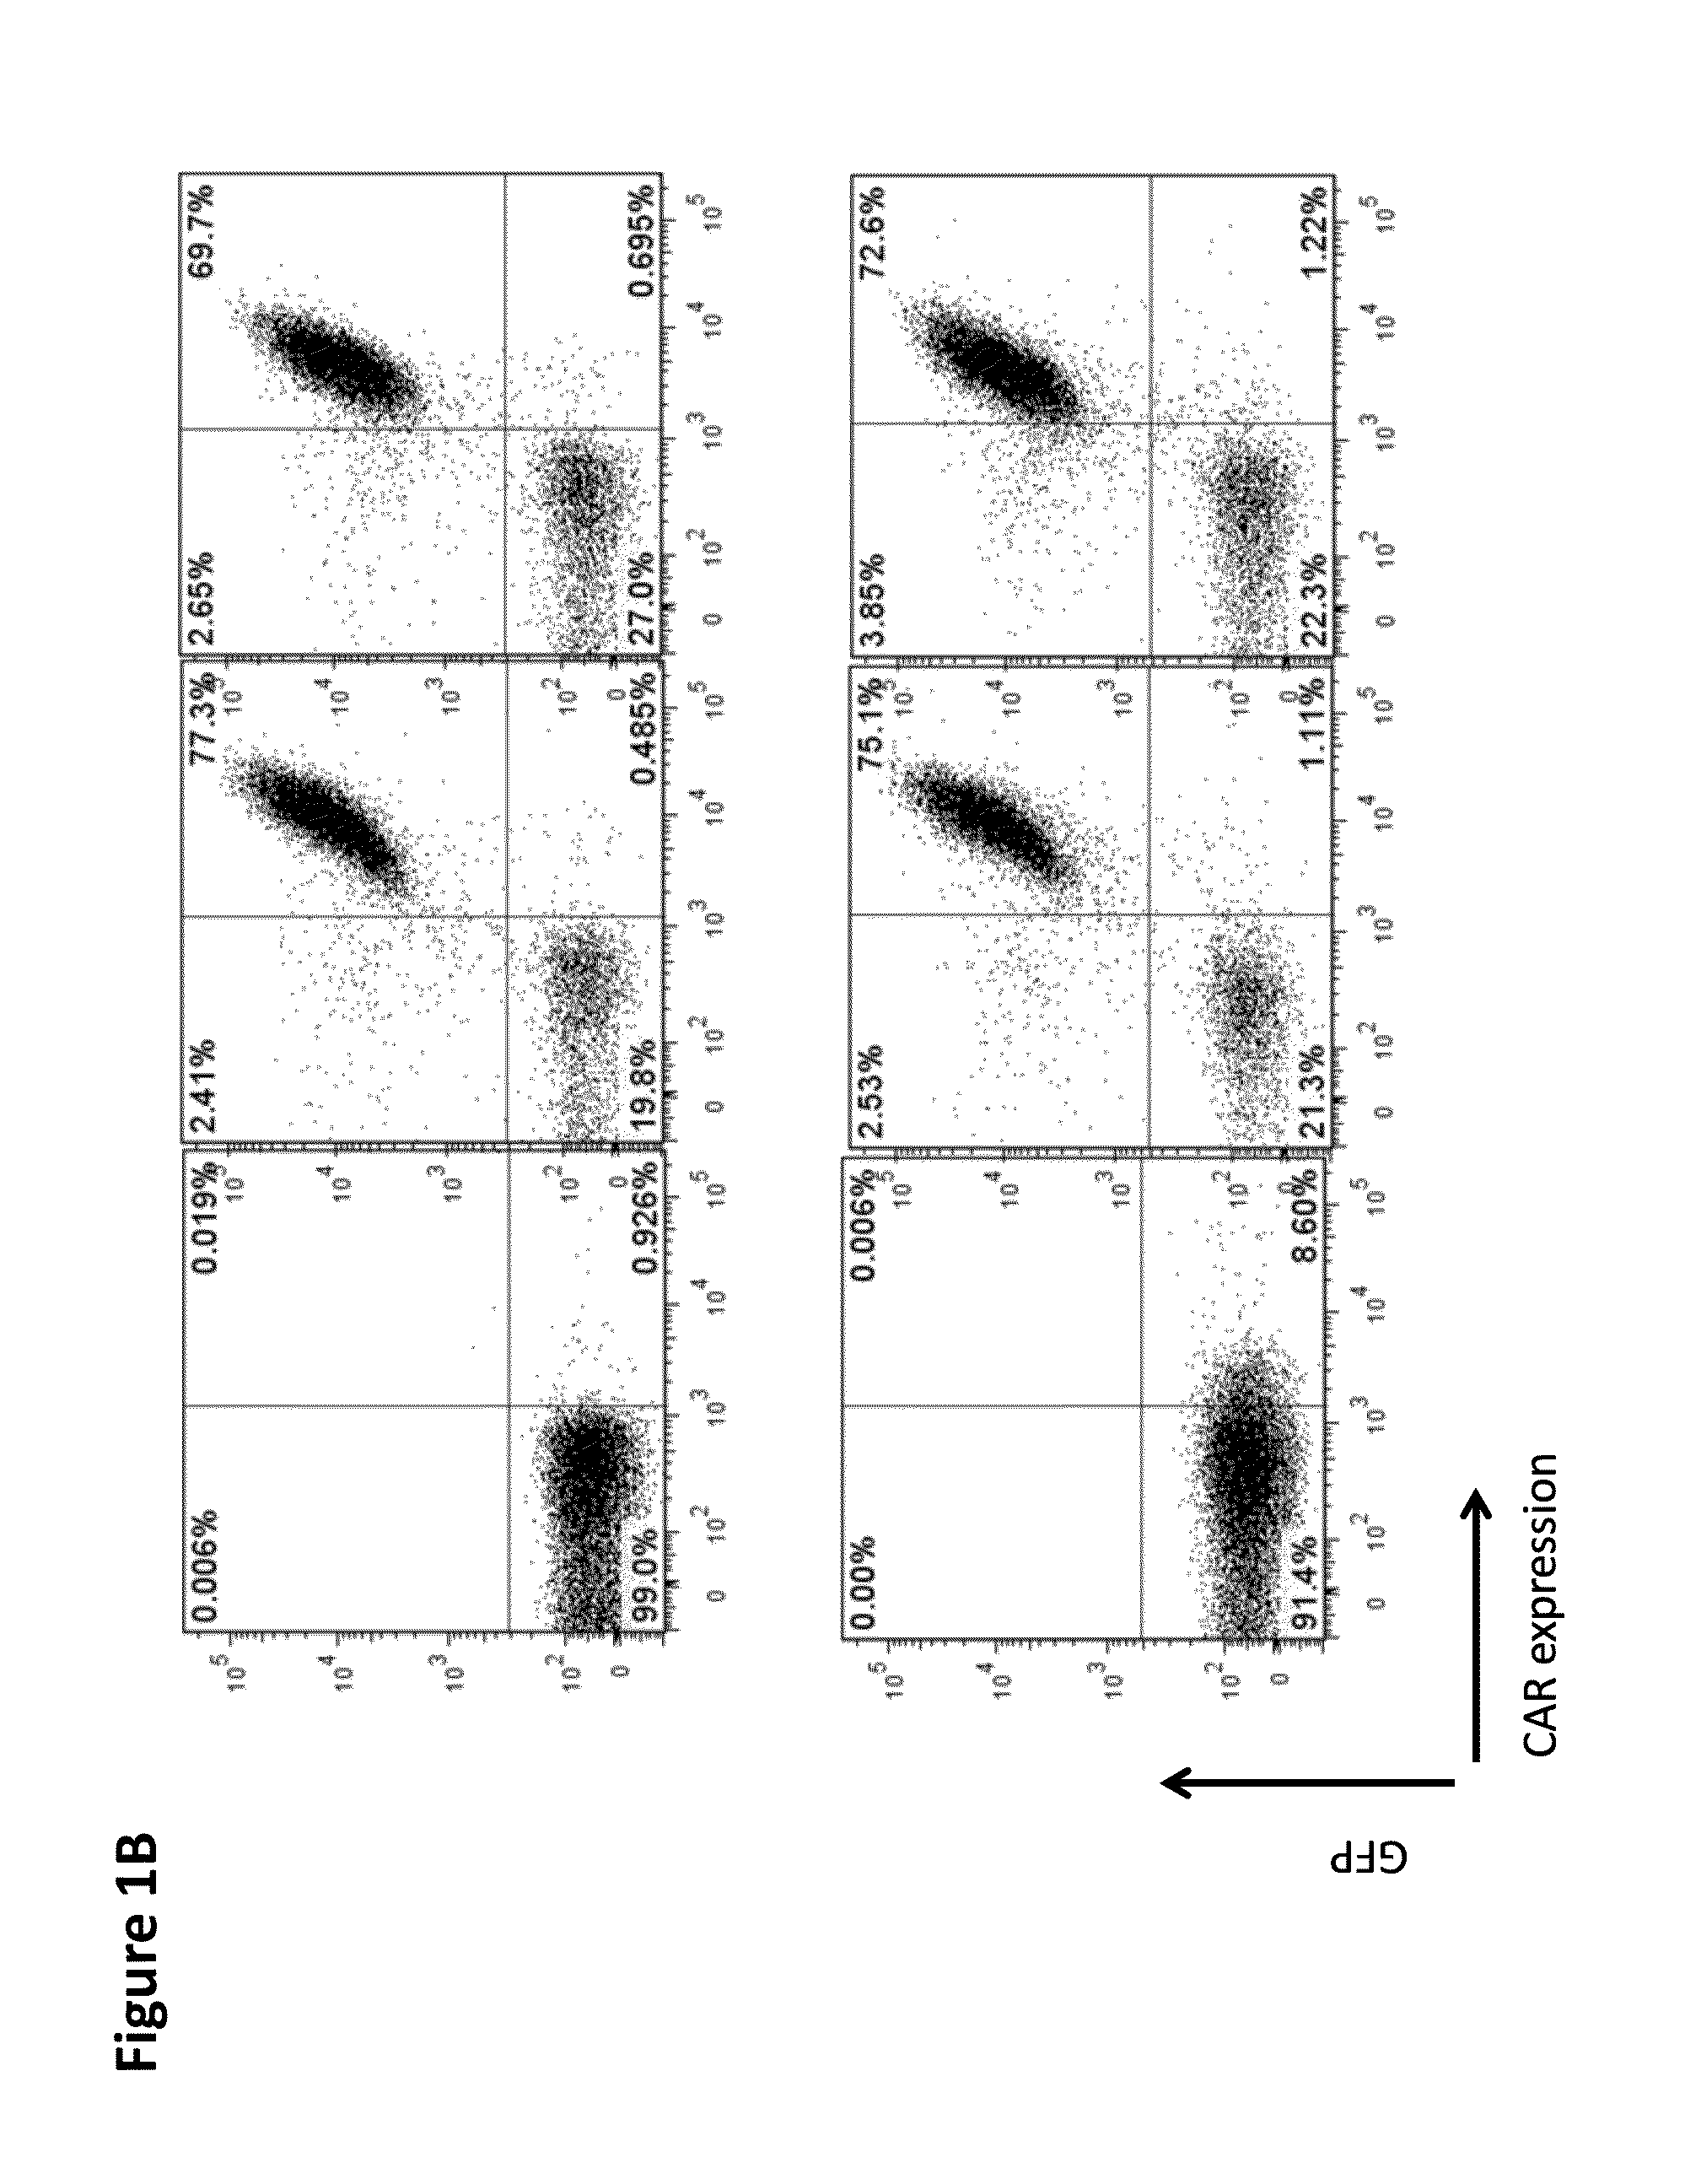 Chimeric antigen receptor specific for folate receptor β